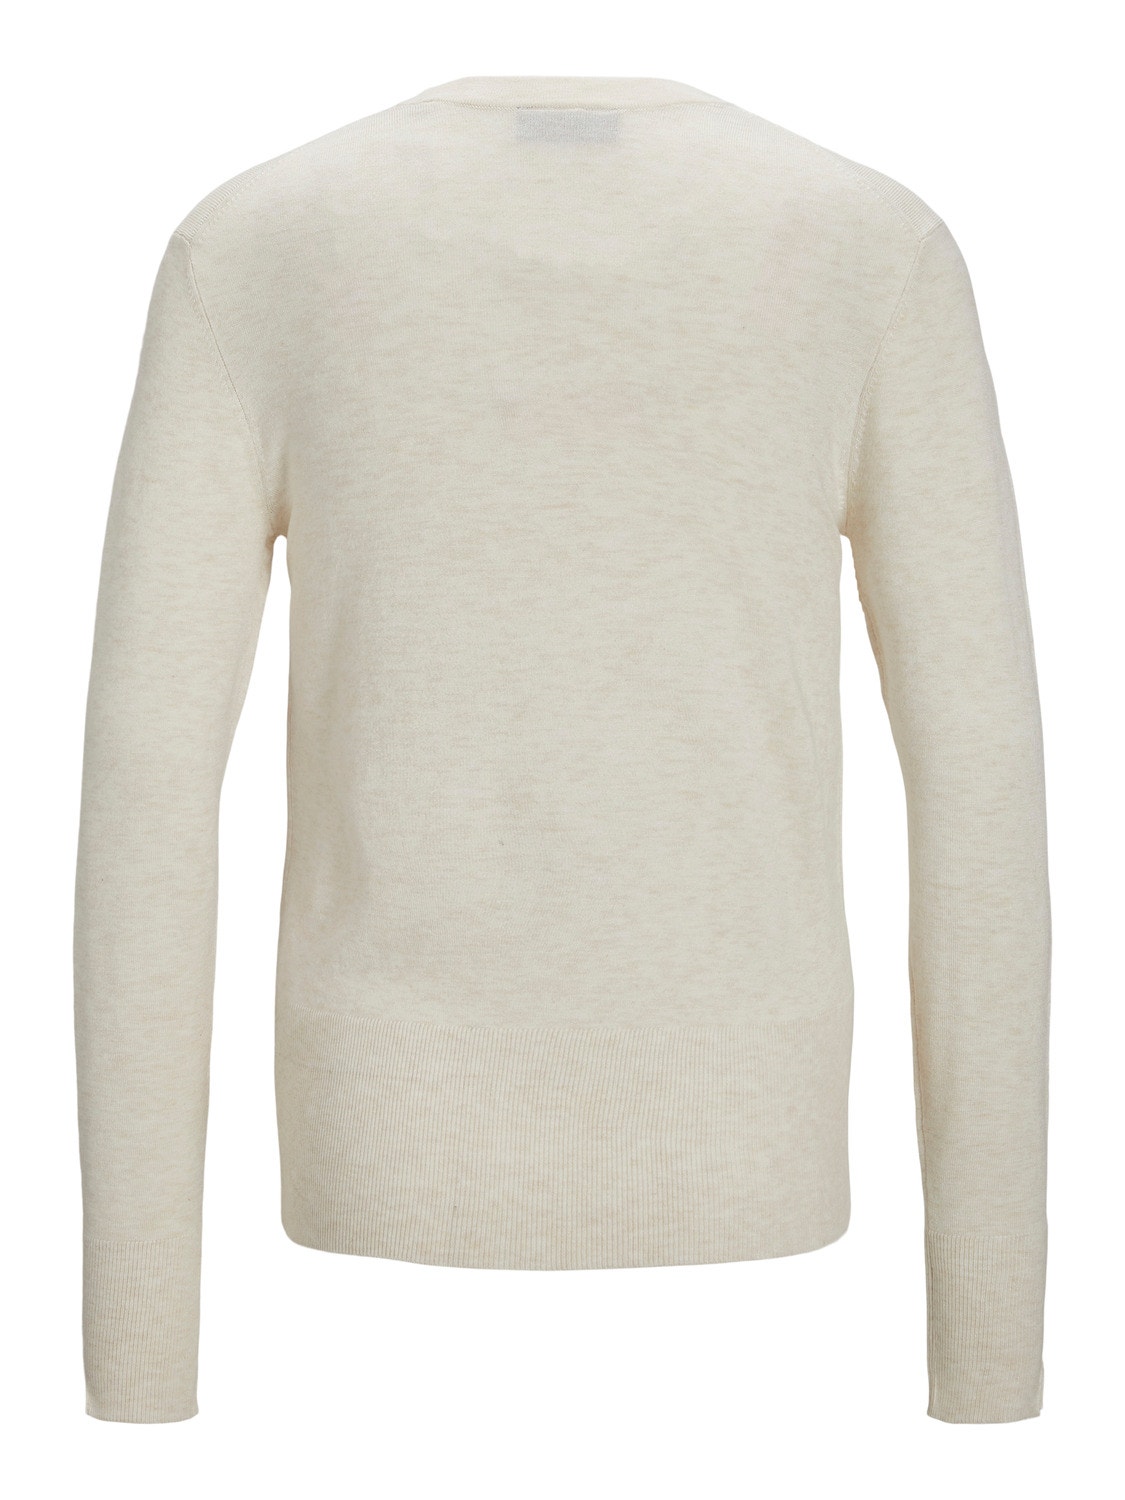 Vintage Jazzercise Sweatshirt Jazzercise Crewneck Jazzercise Sweater  Pullover Streetwear Style Sports White Colour Size X-large 